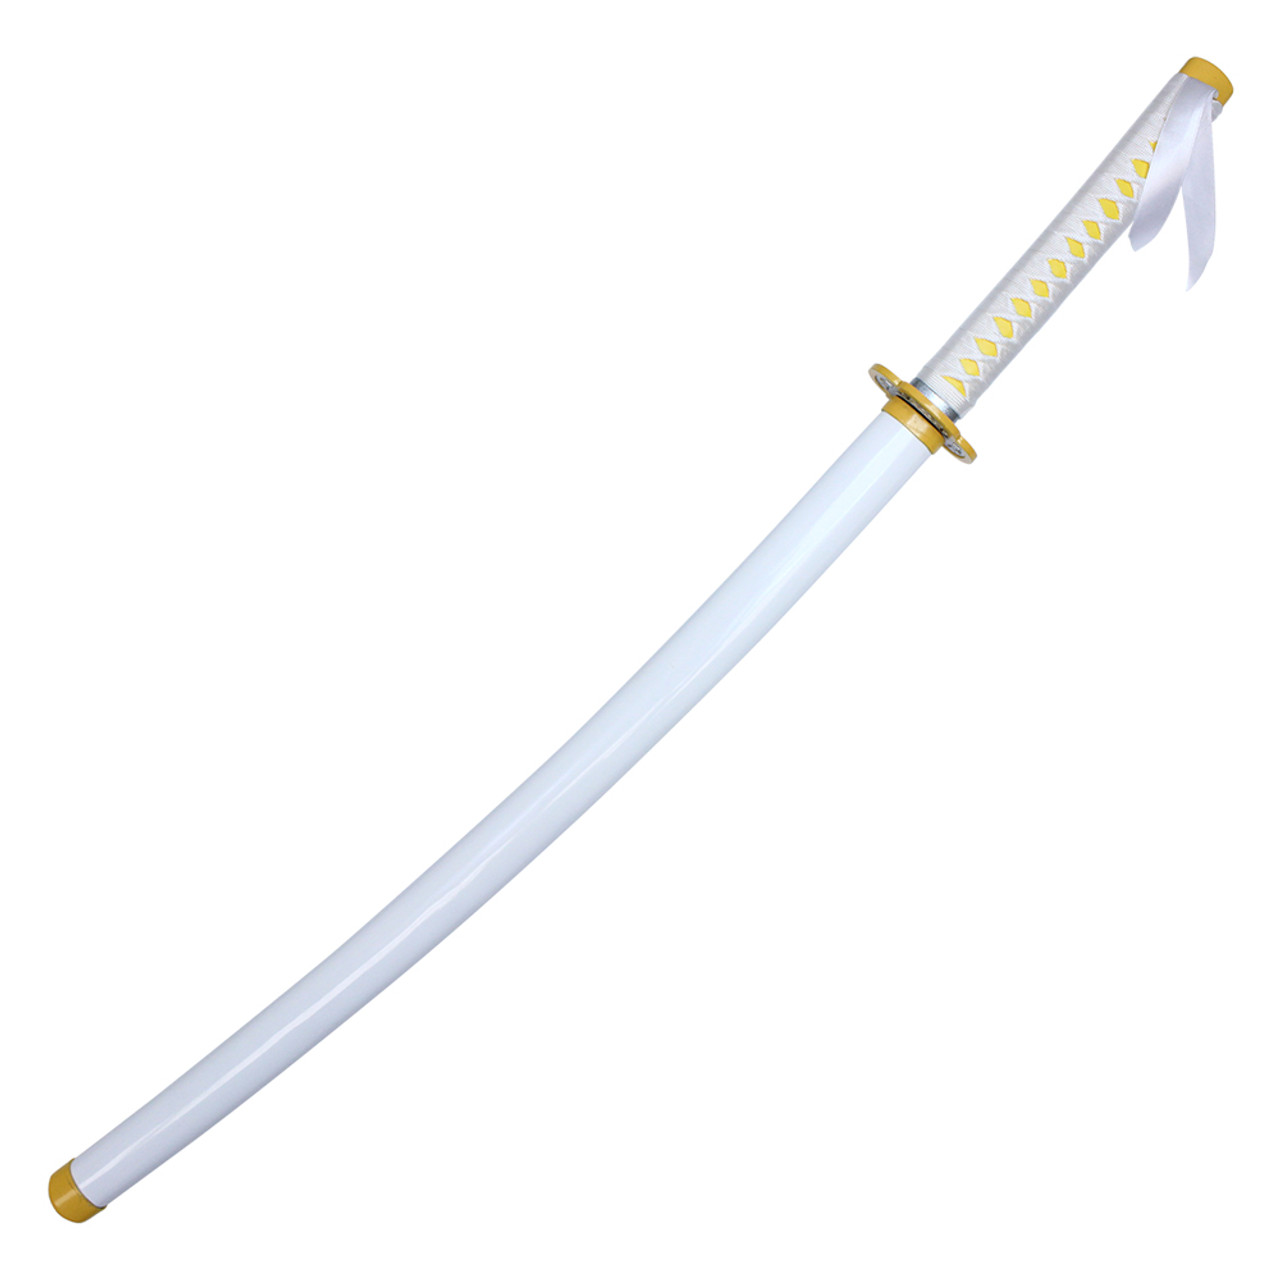 41" Metal Fantasy Samurai Replica Sword Agatsuma Zenitsu Sword w/ Scabbard